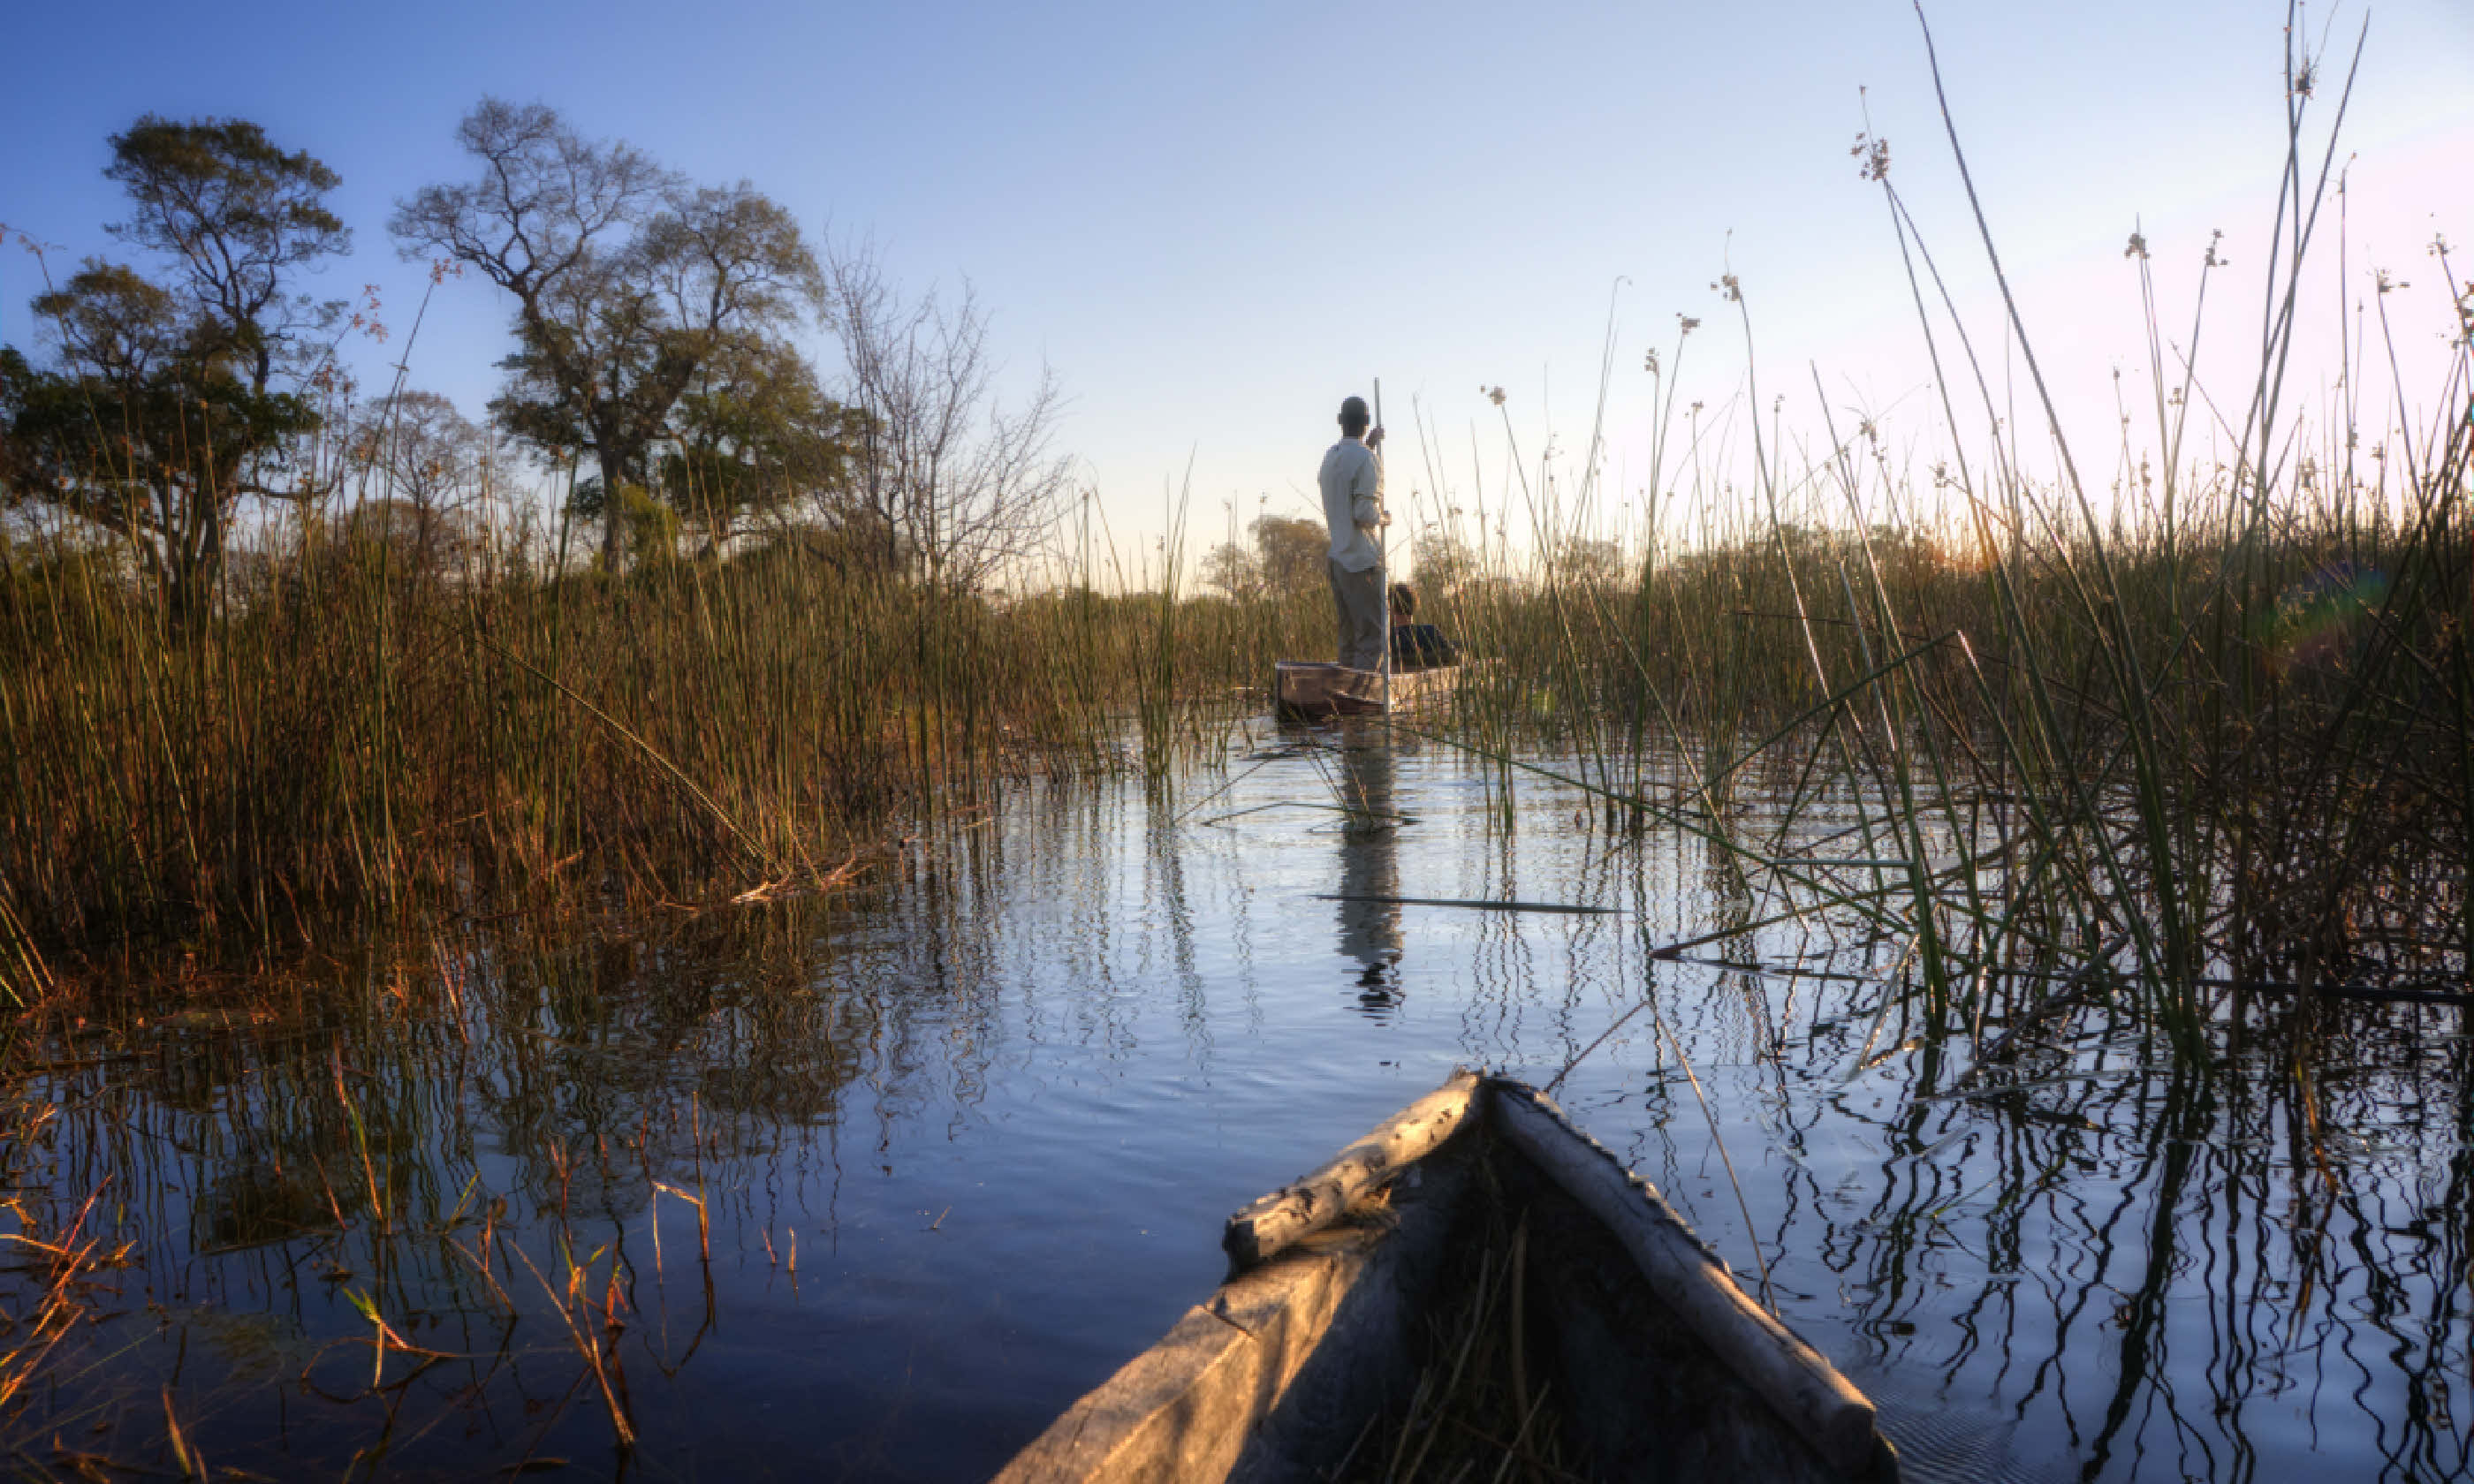 Boat trip in Okavango Delta (Shutterstock)